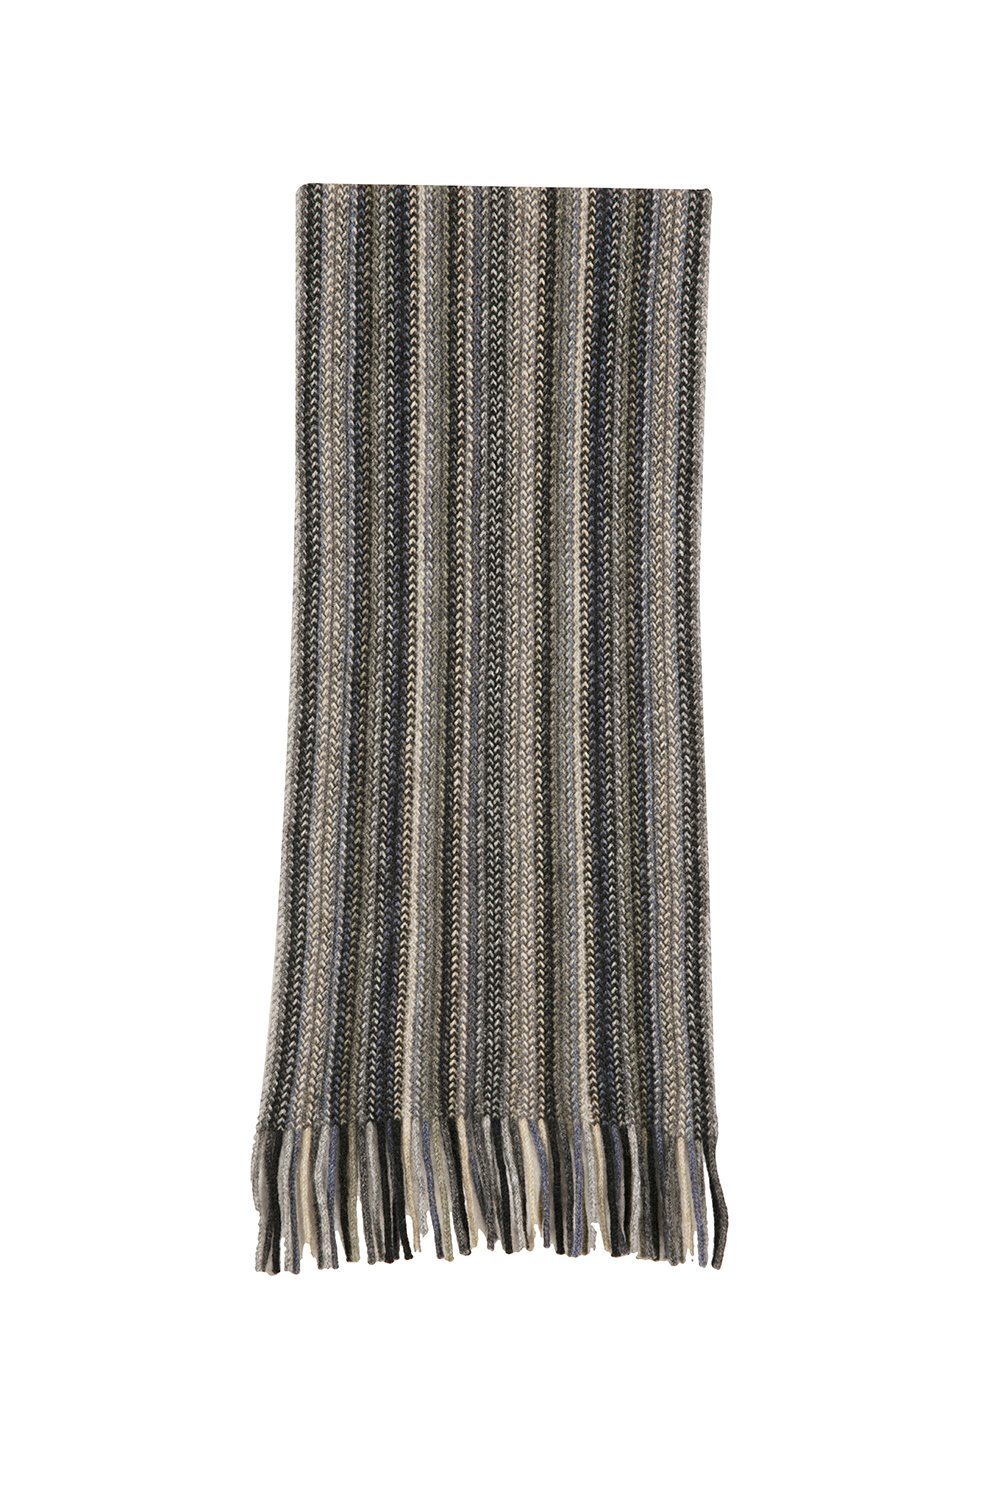 Multi Stripe Scarf-Native World-The WoolPress Arrowtown